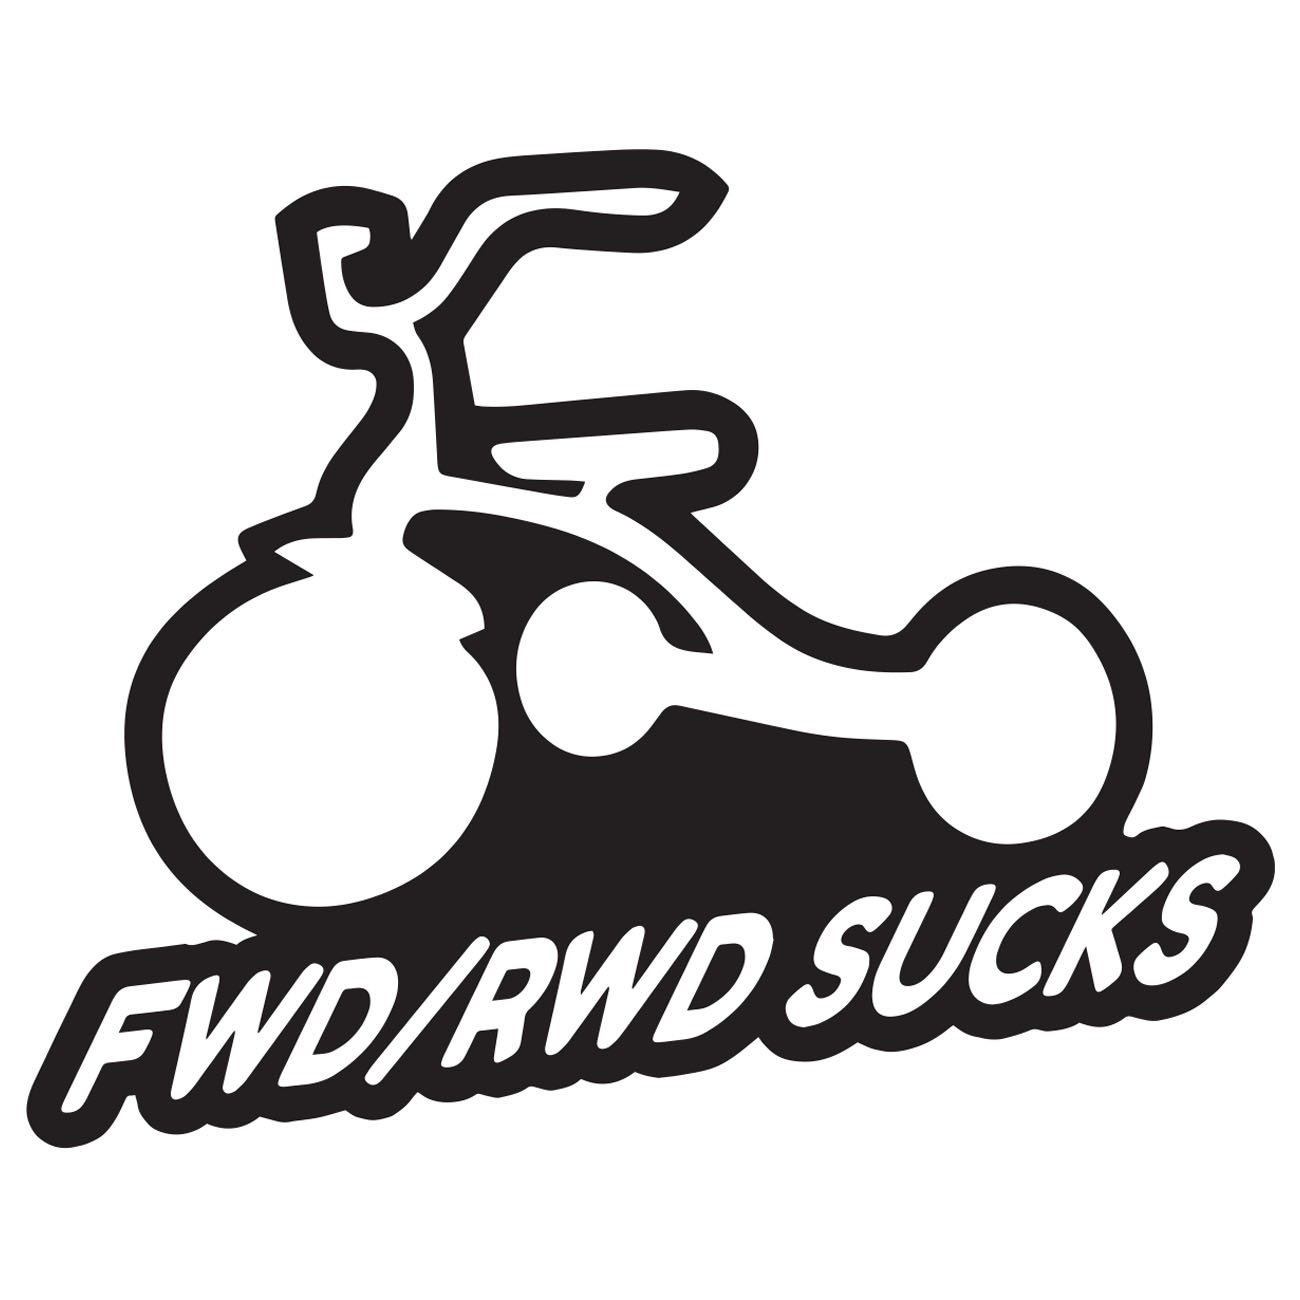 FWD/RWD sucks